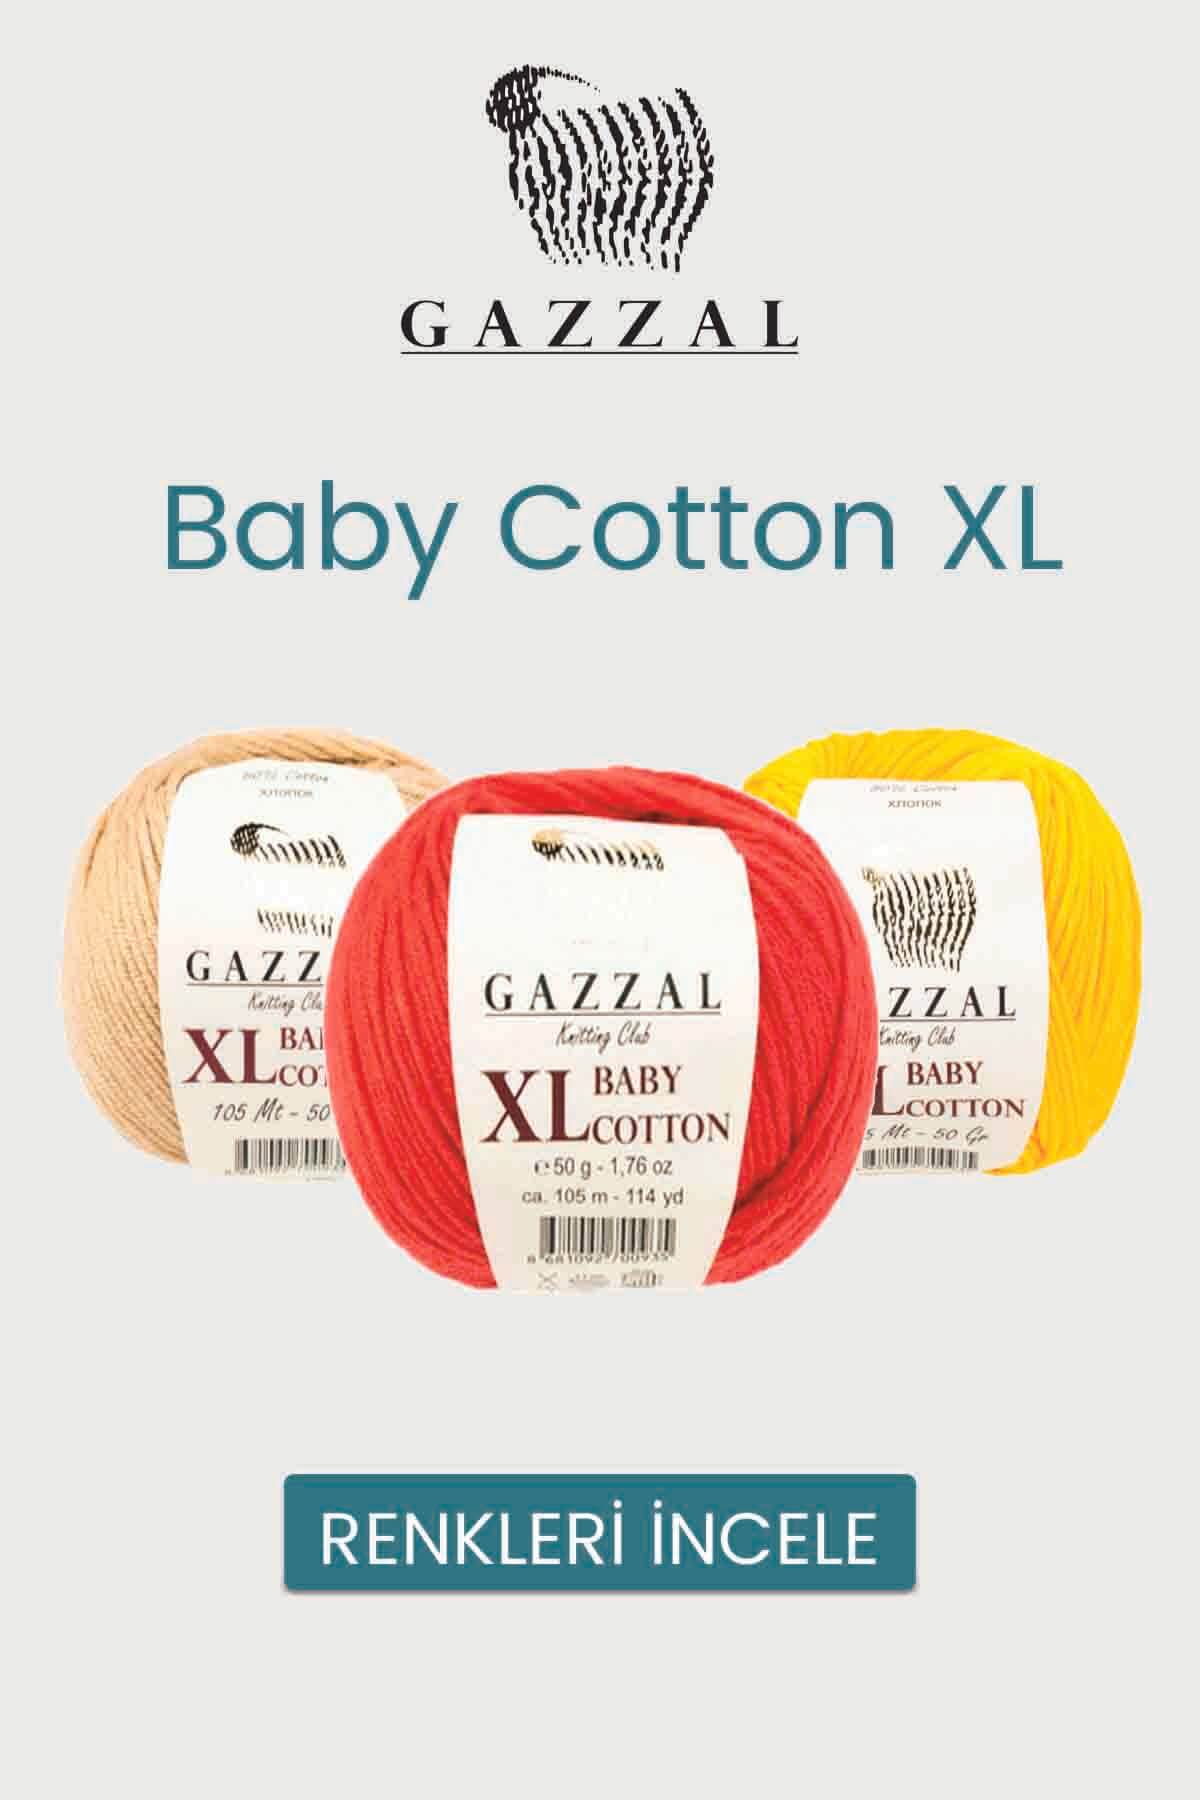 gazzal-baby-cotton-xl-tekstilland